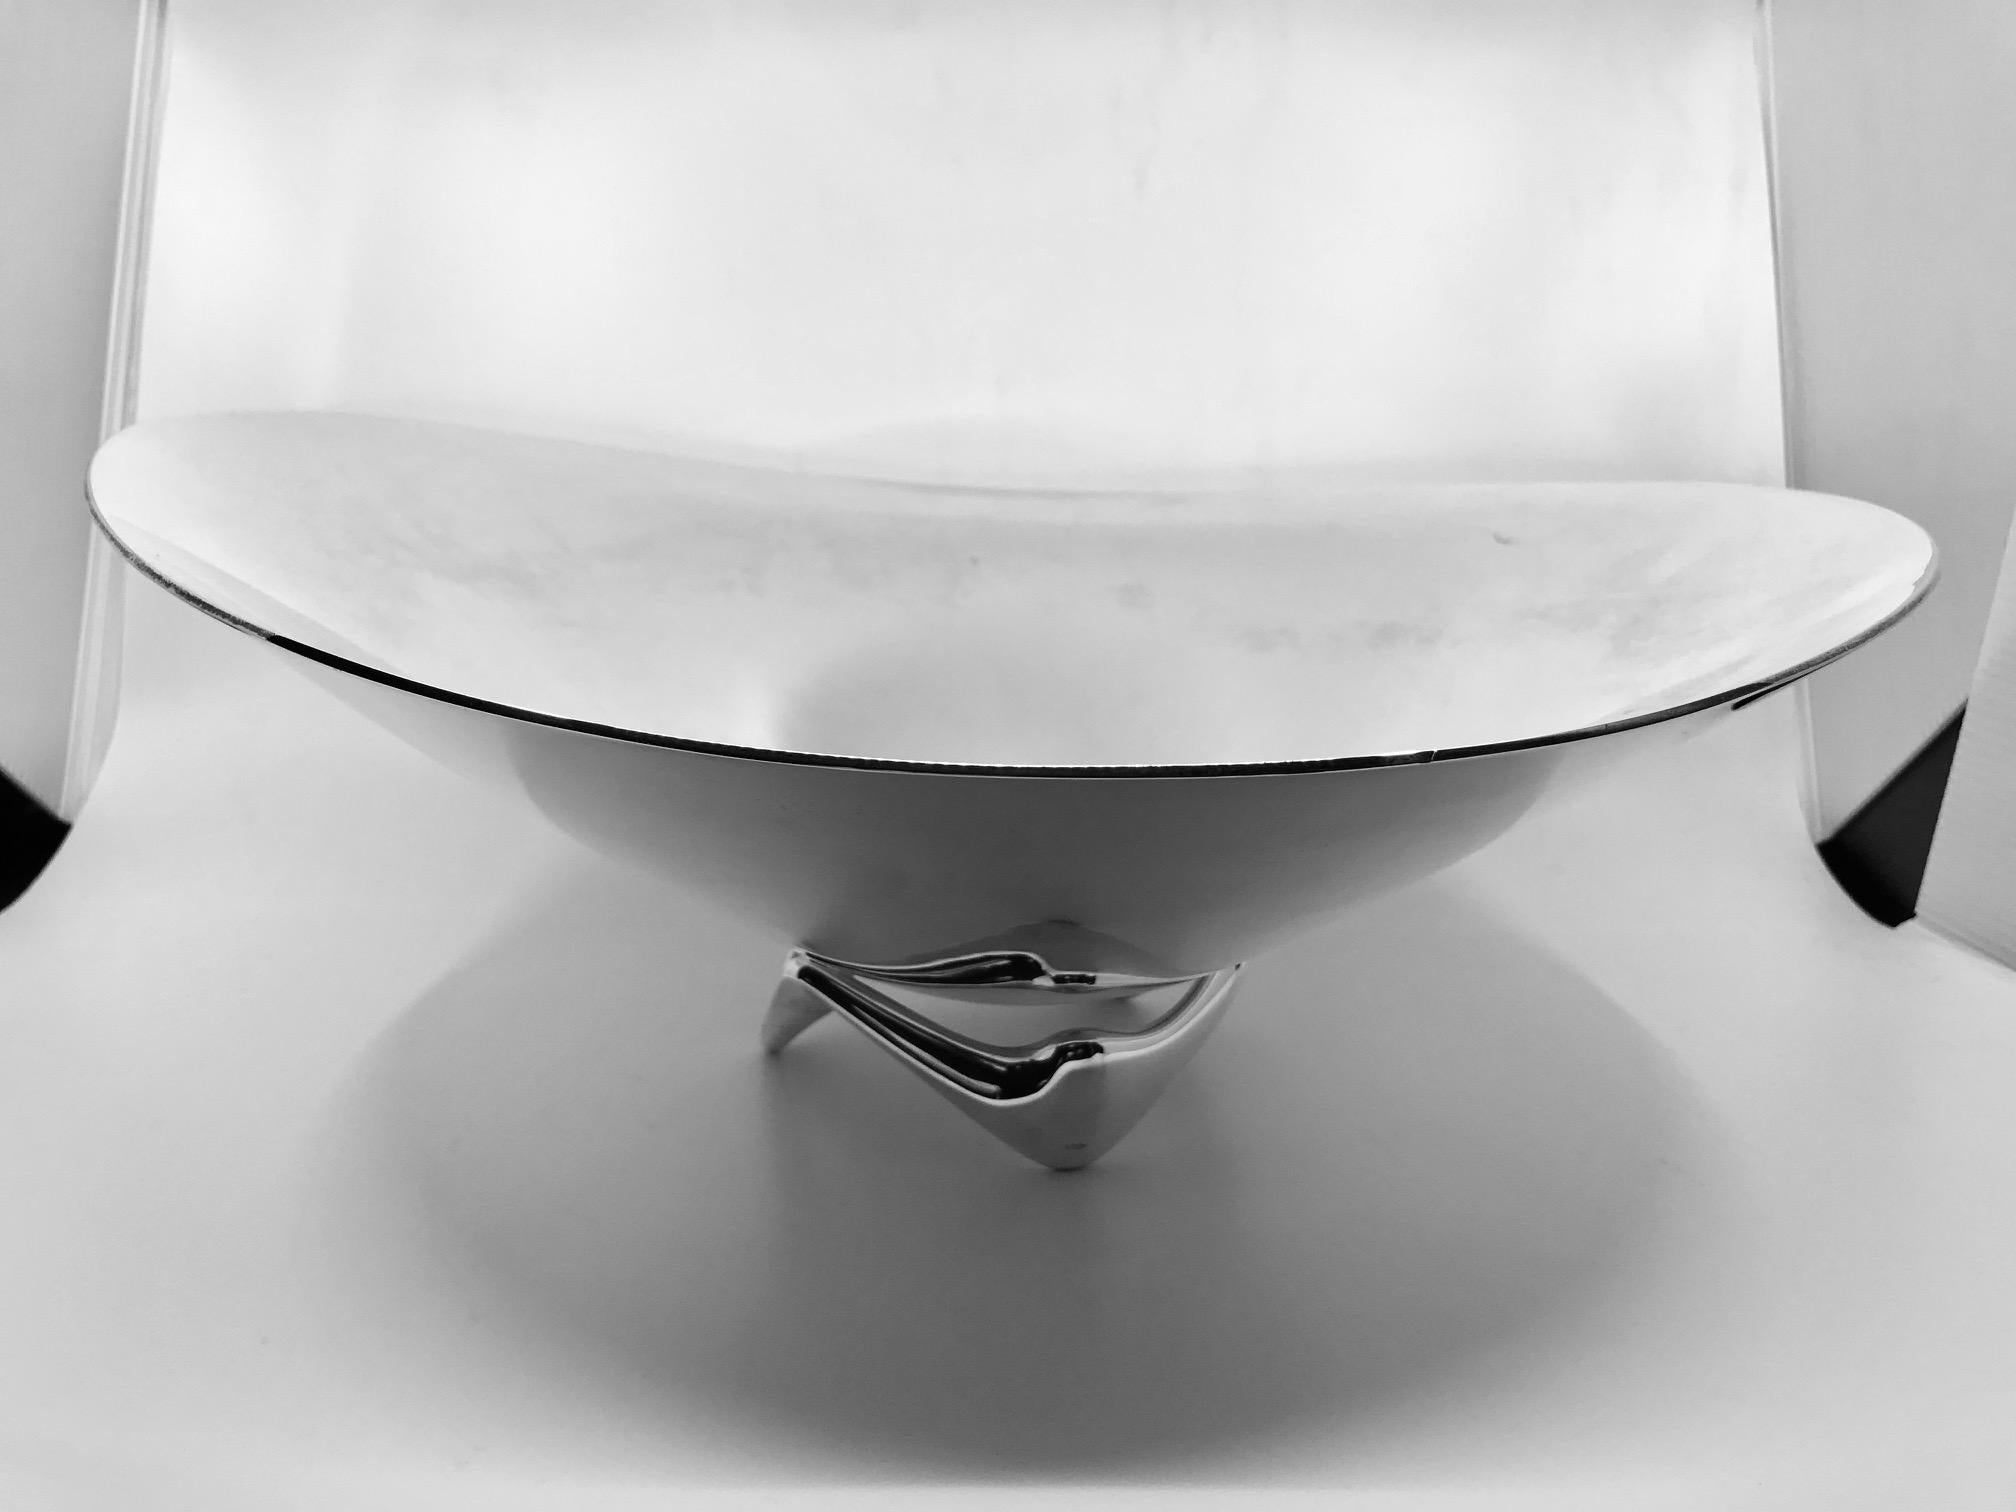 An impressive midcentury Georg Jensen sterling silver centrepiece bowl, design #980 by Henning Koppel from circa 1948.
Measures: 6? in height x 15½” in “diameter”(15.2cm x 39.5cm). Gross weight 133oz (3,775g).
Georg Jensen hallmark and date code